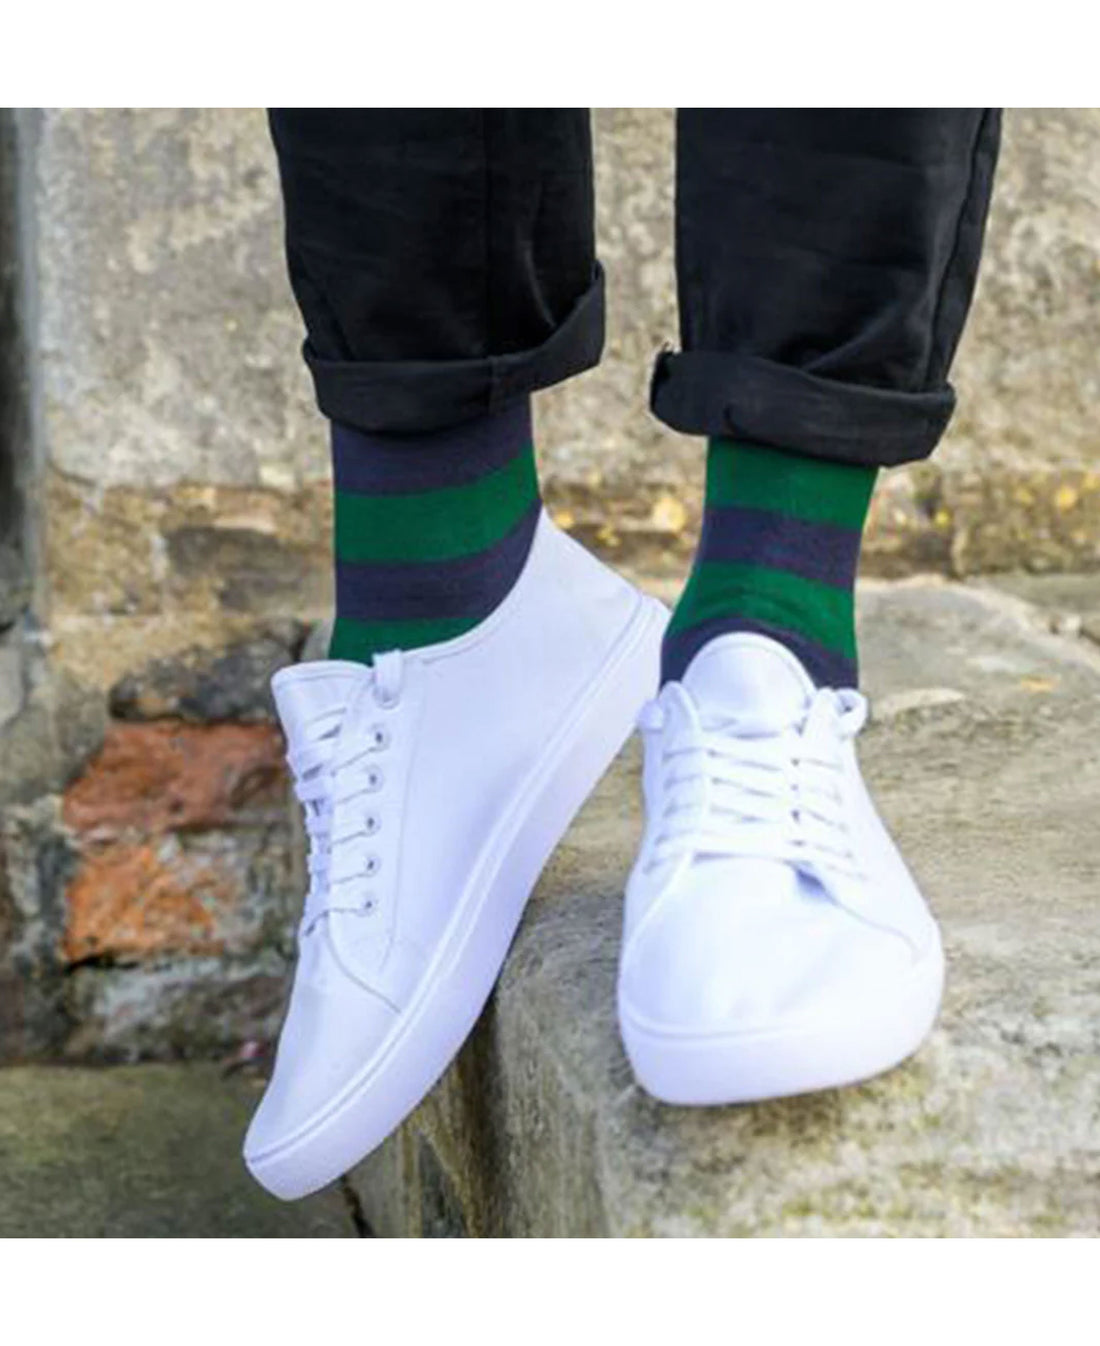 Striped Socks - Green/Navy Striped